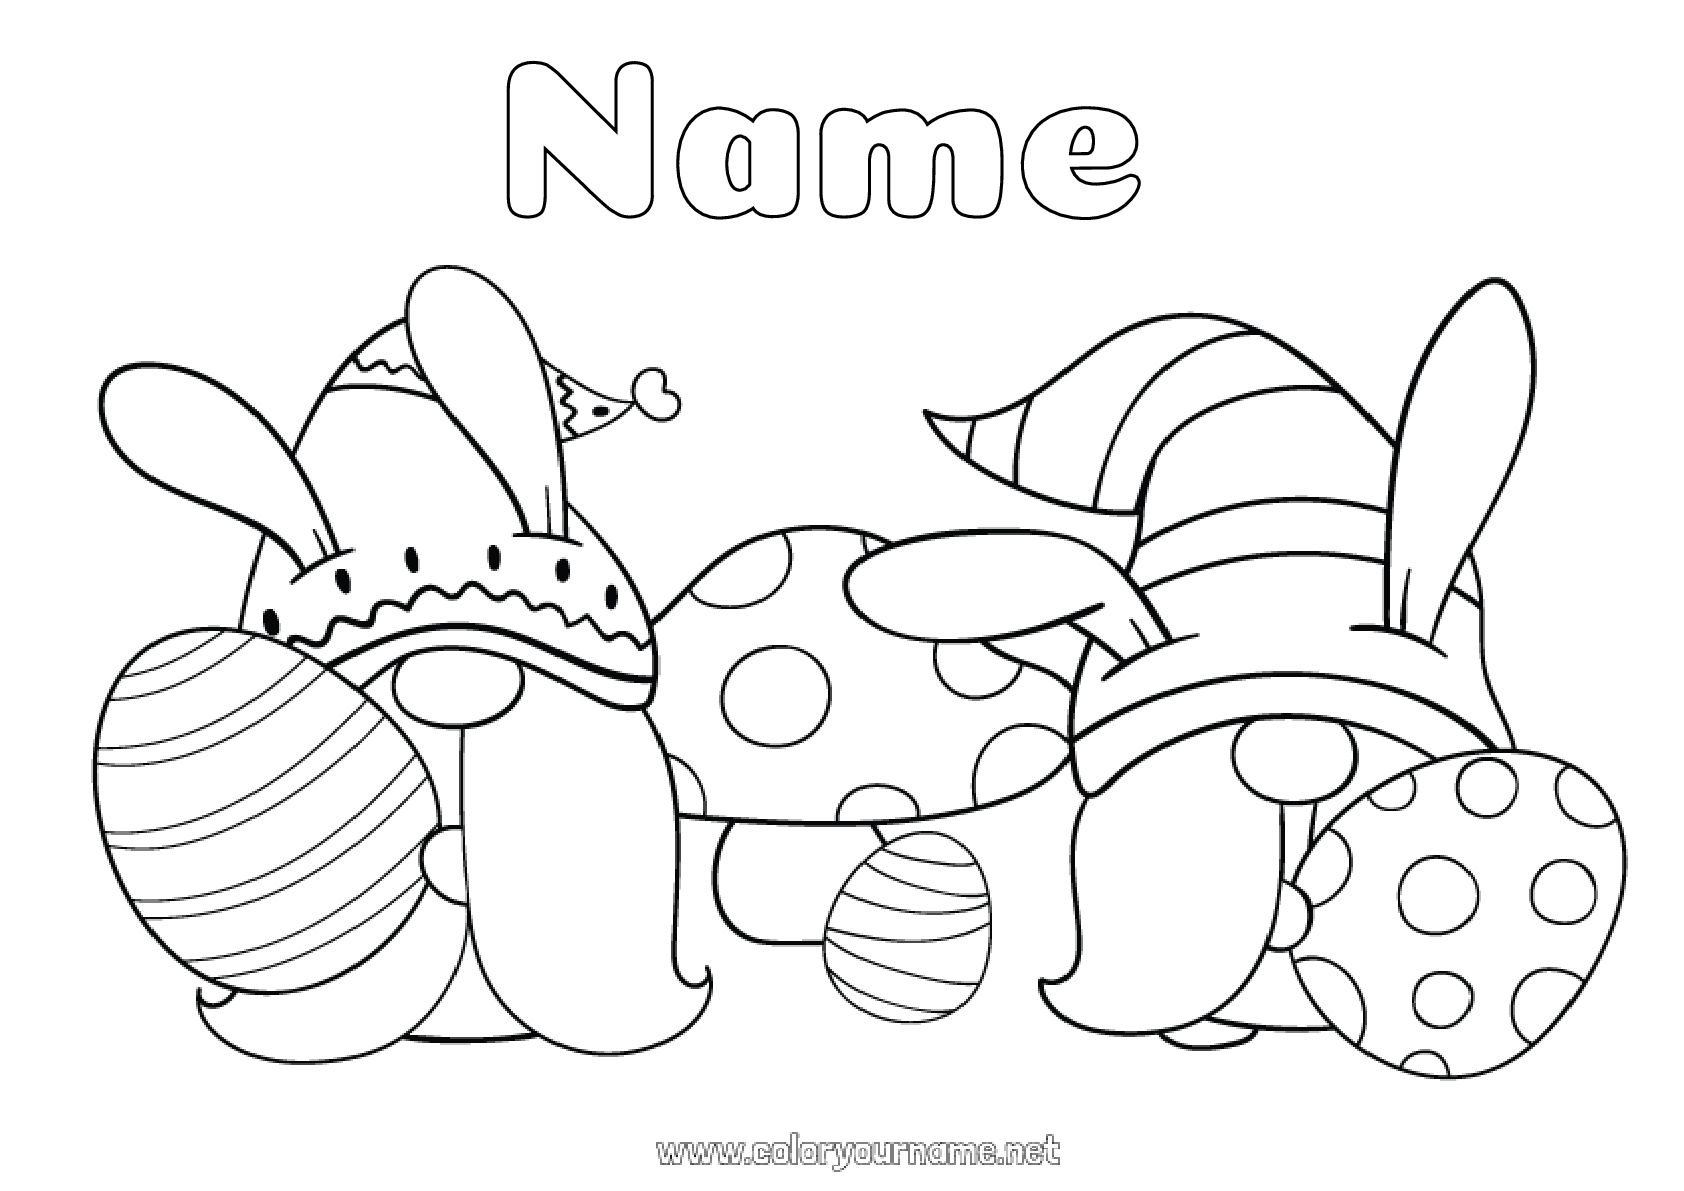 Coloring page No.1502 - Spring Mushroom Gnome